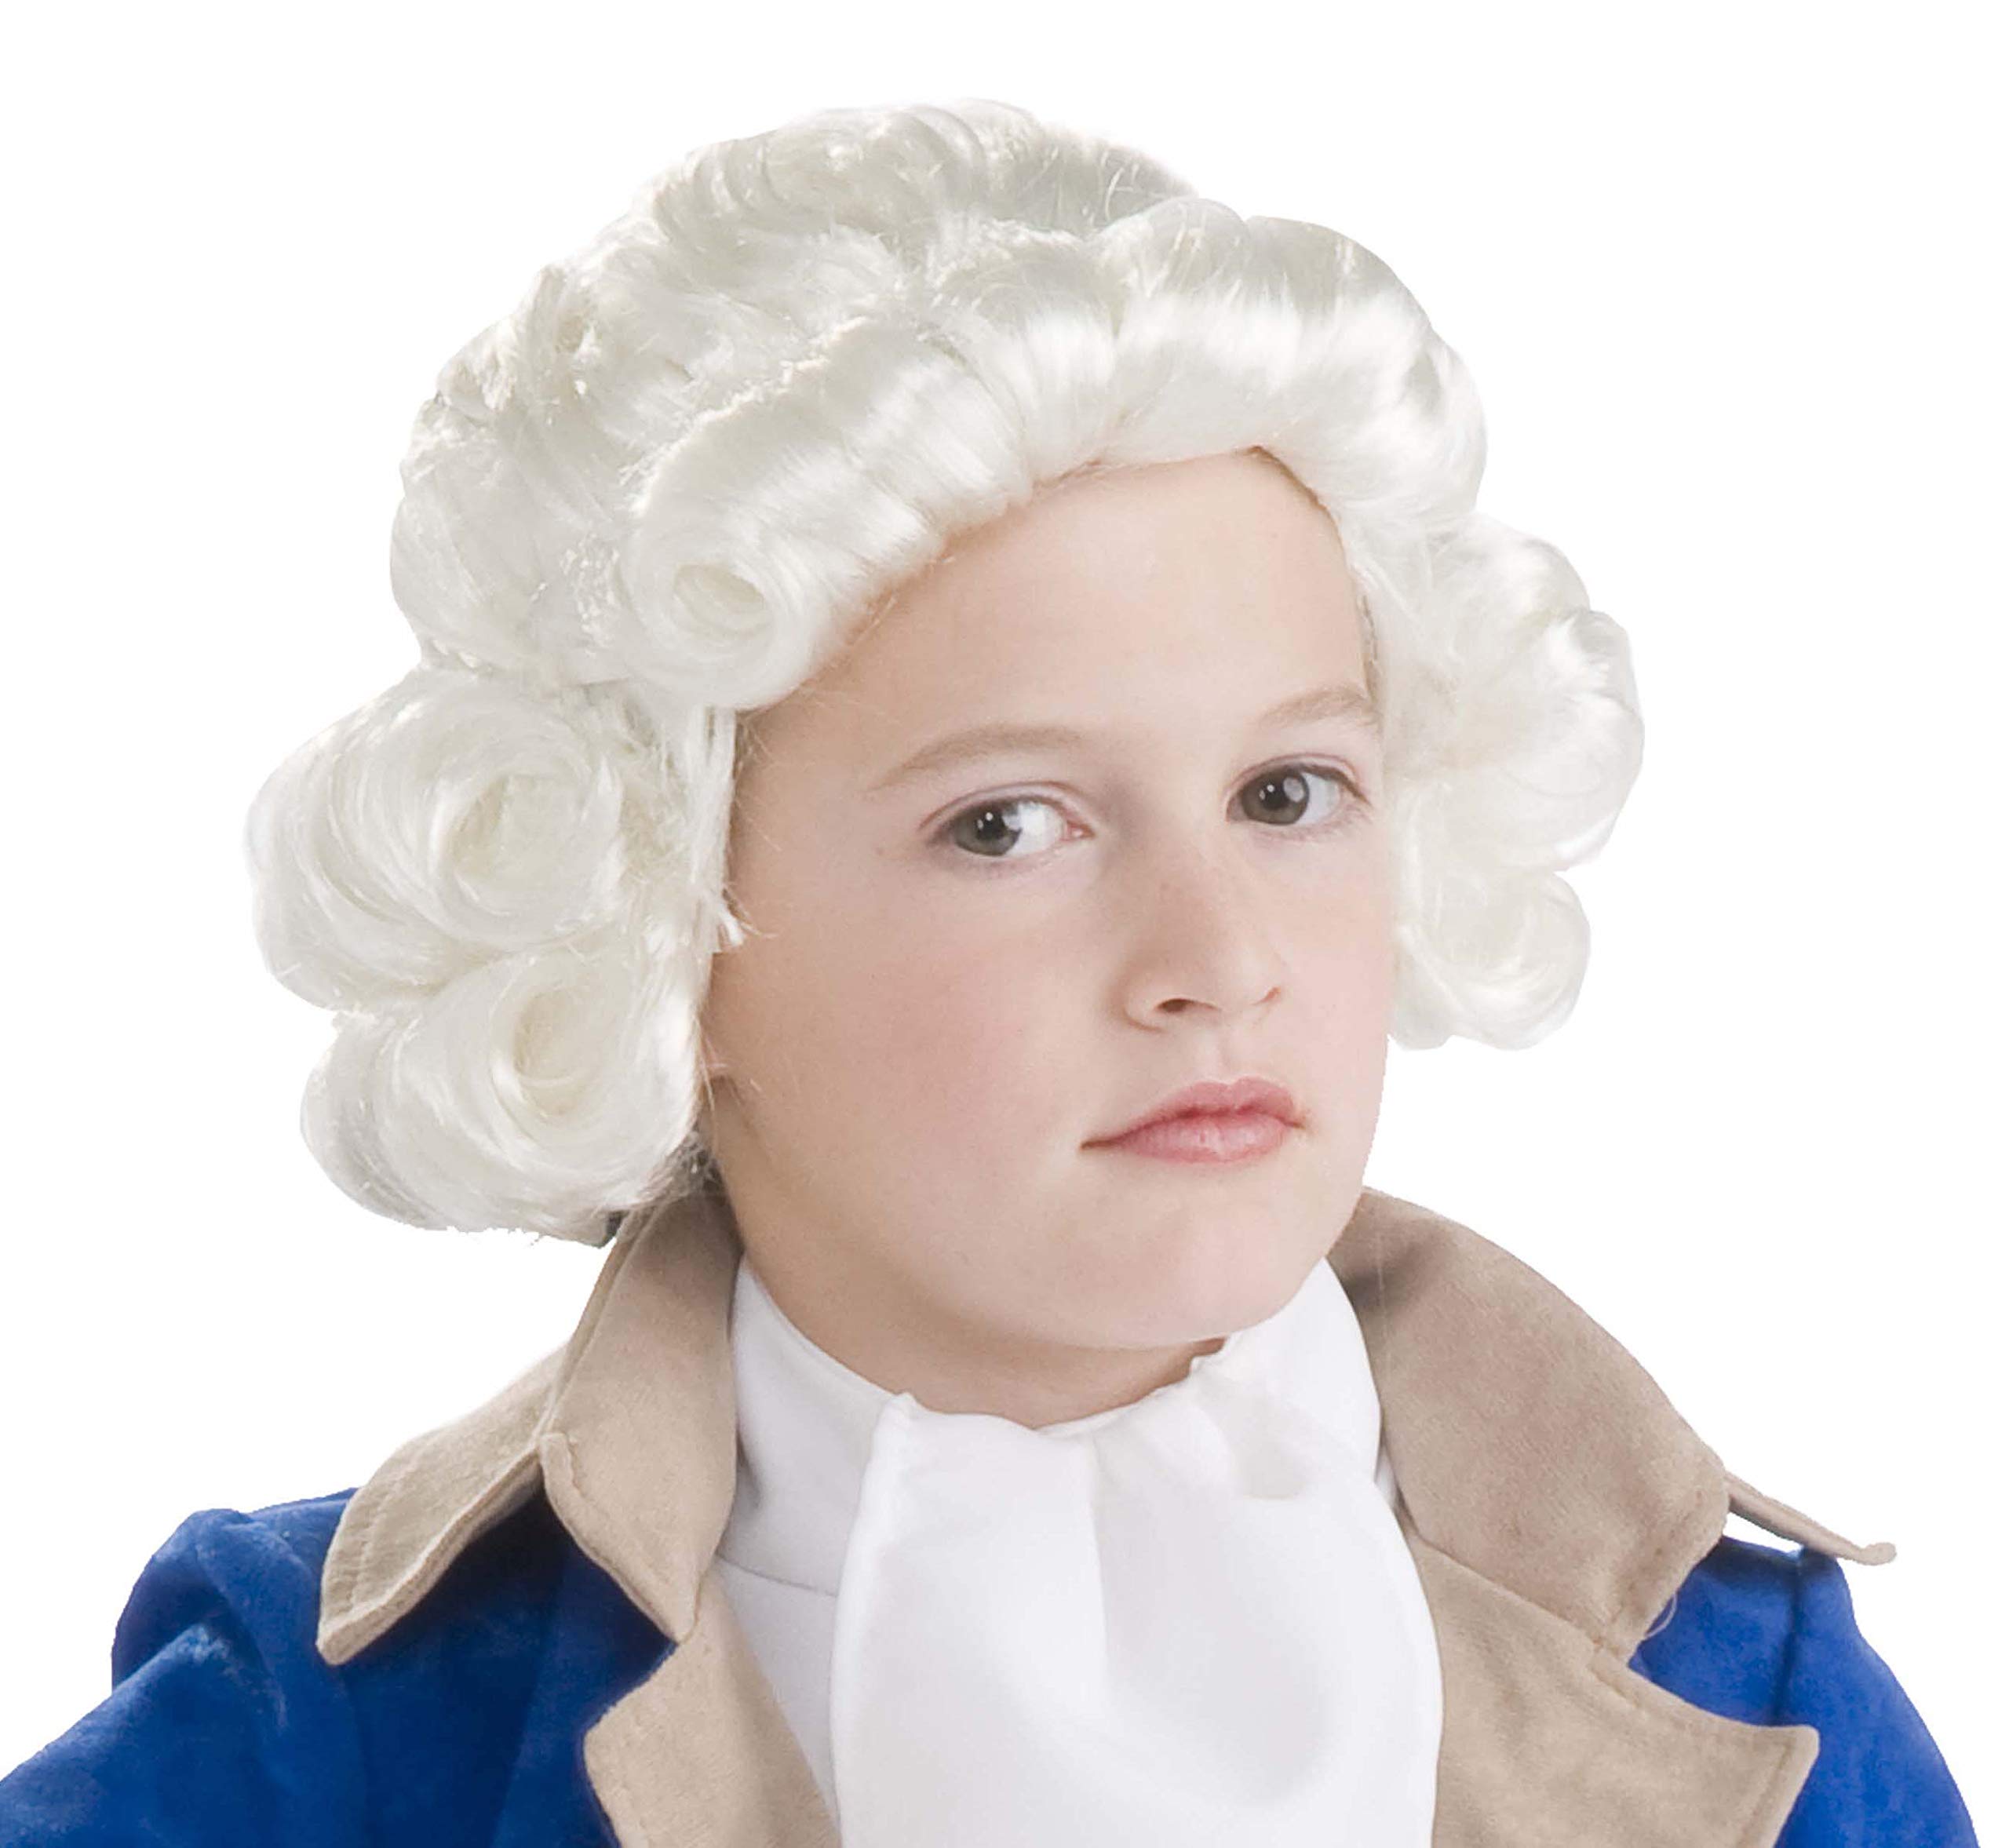 Forum Novelties Colonial Boy Child Wig, White